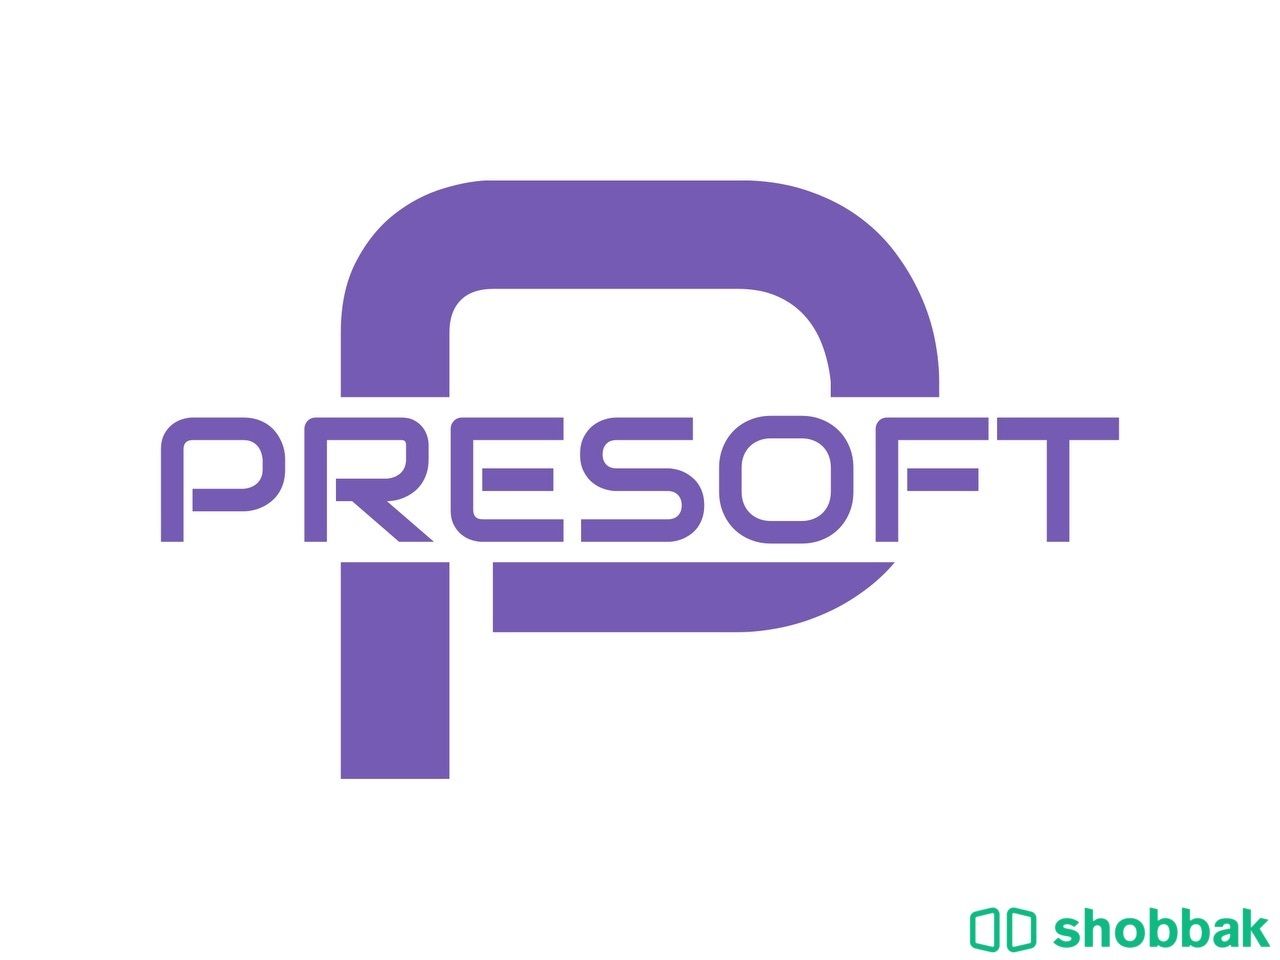 presoft لتصميم وبرمجة المواقع والمتاجر و التطبيقات الالكترونية شباك السعودية